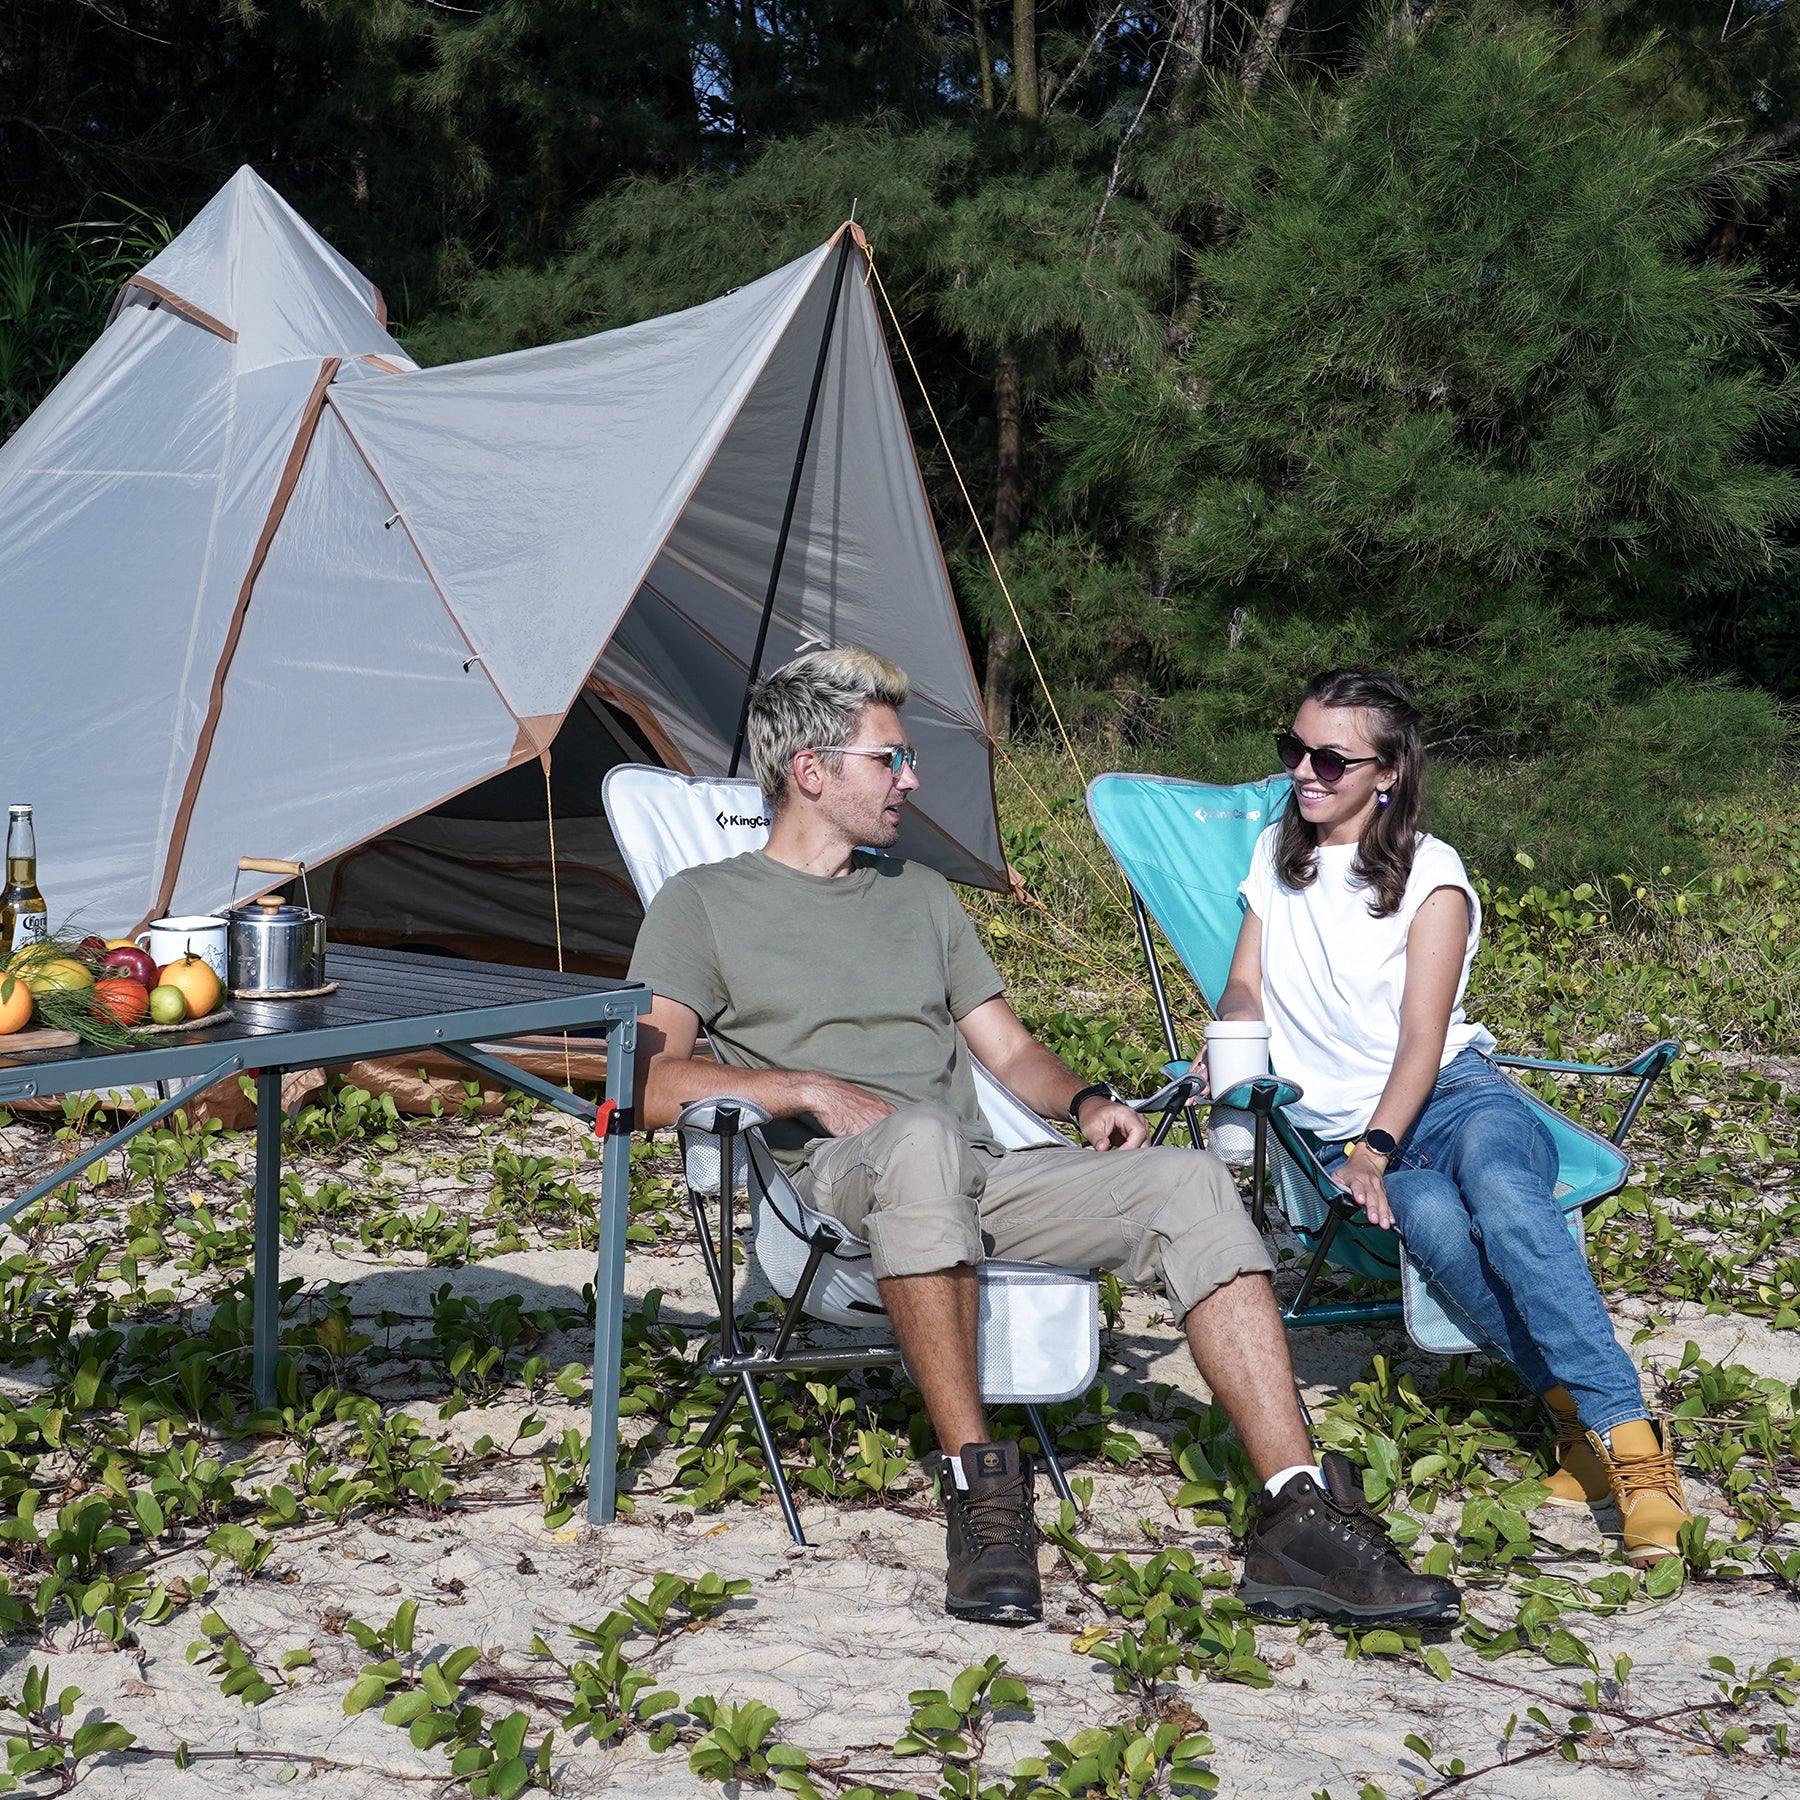 KingCamp Highback Camping Chairs